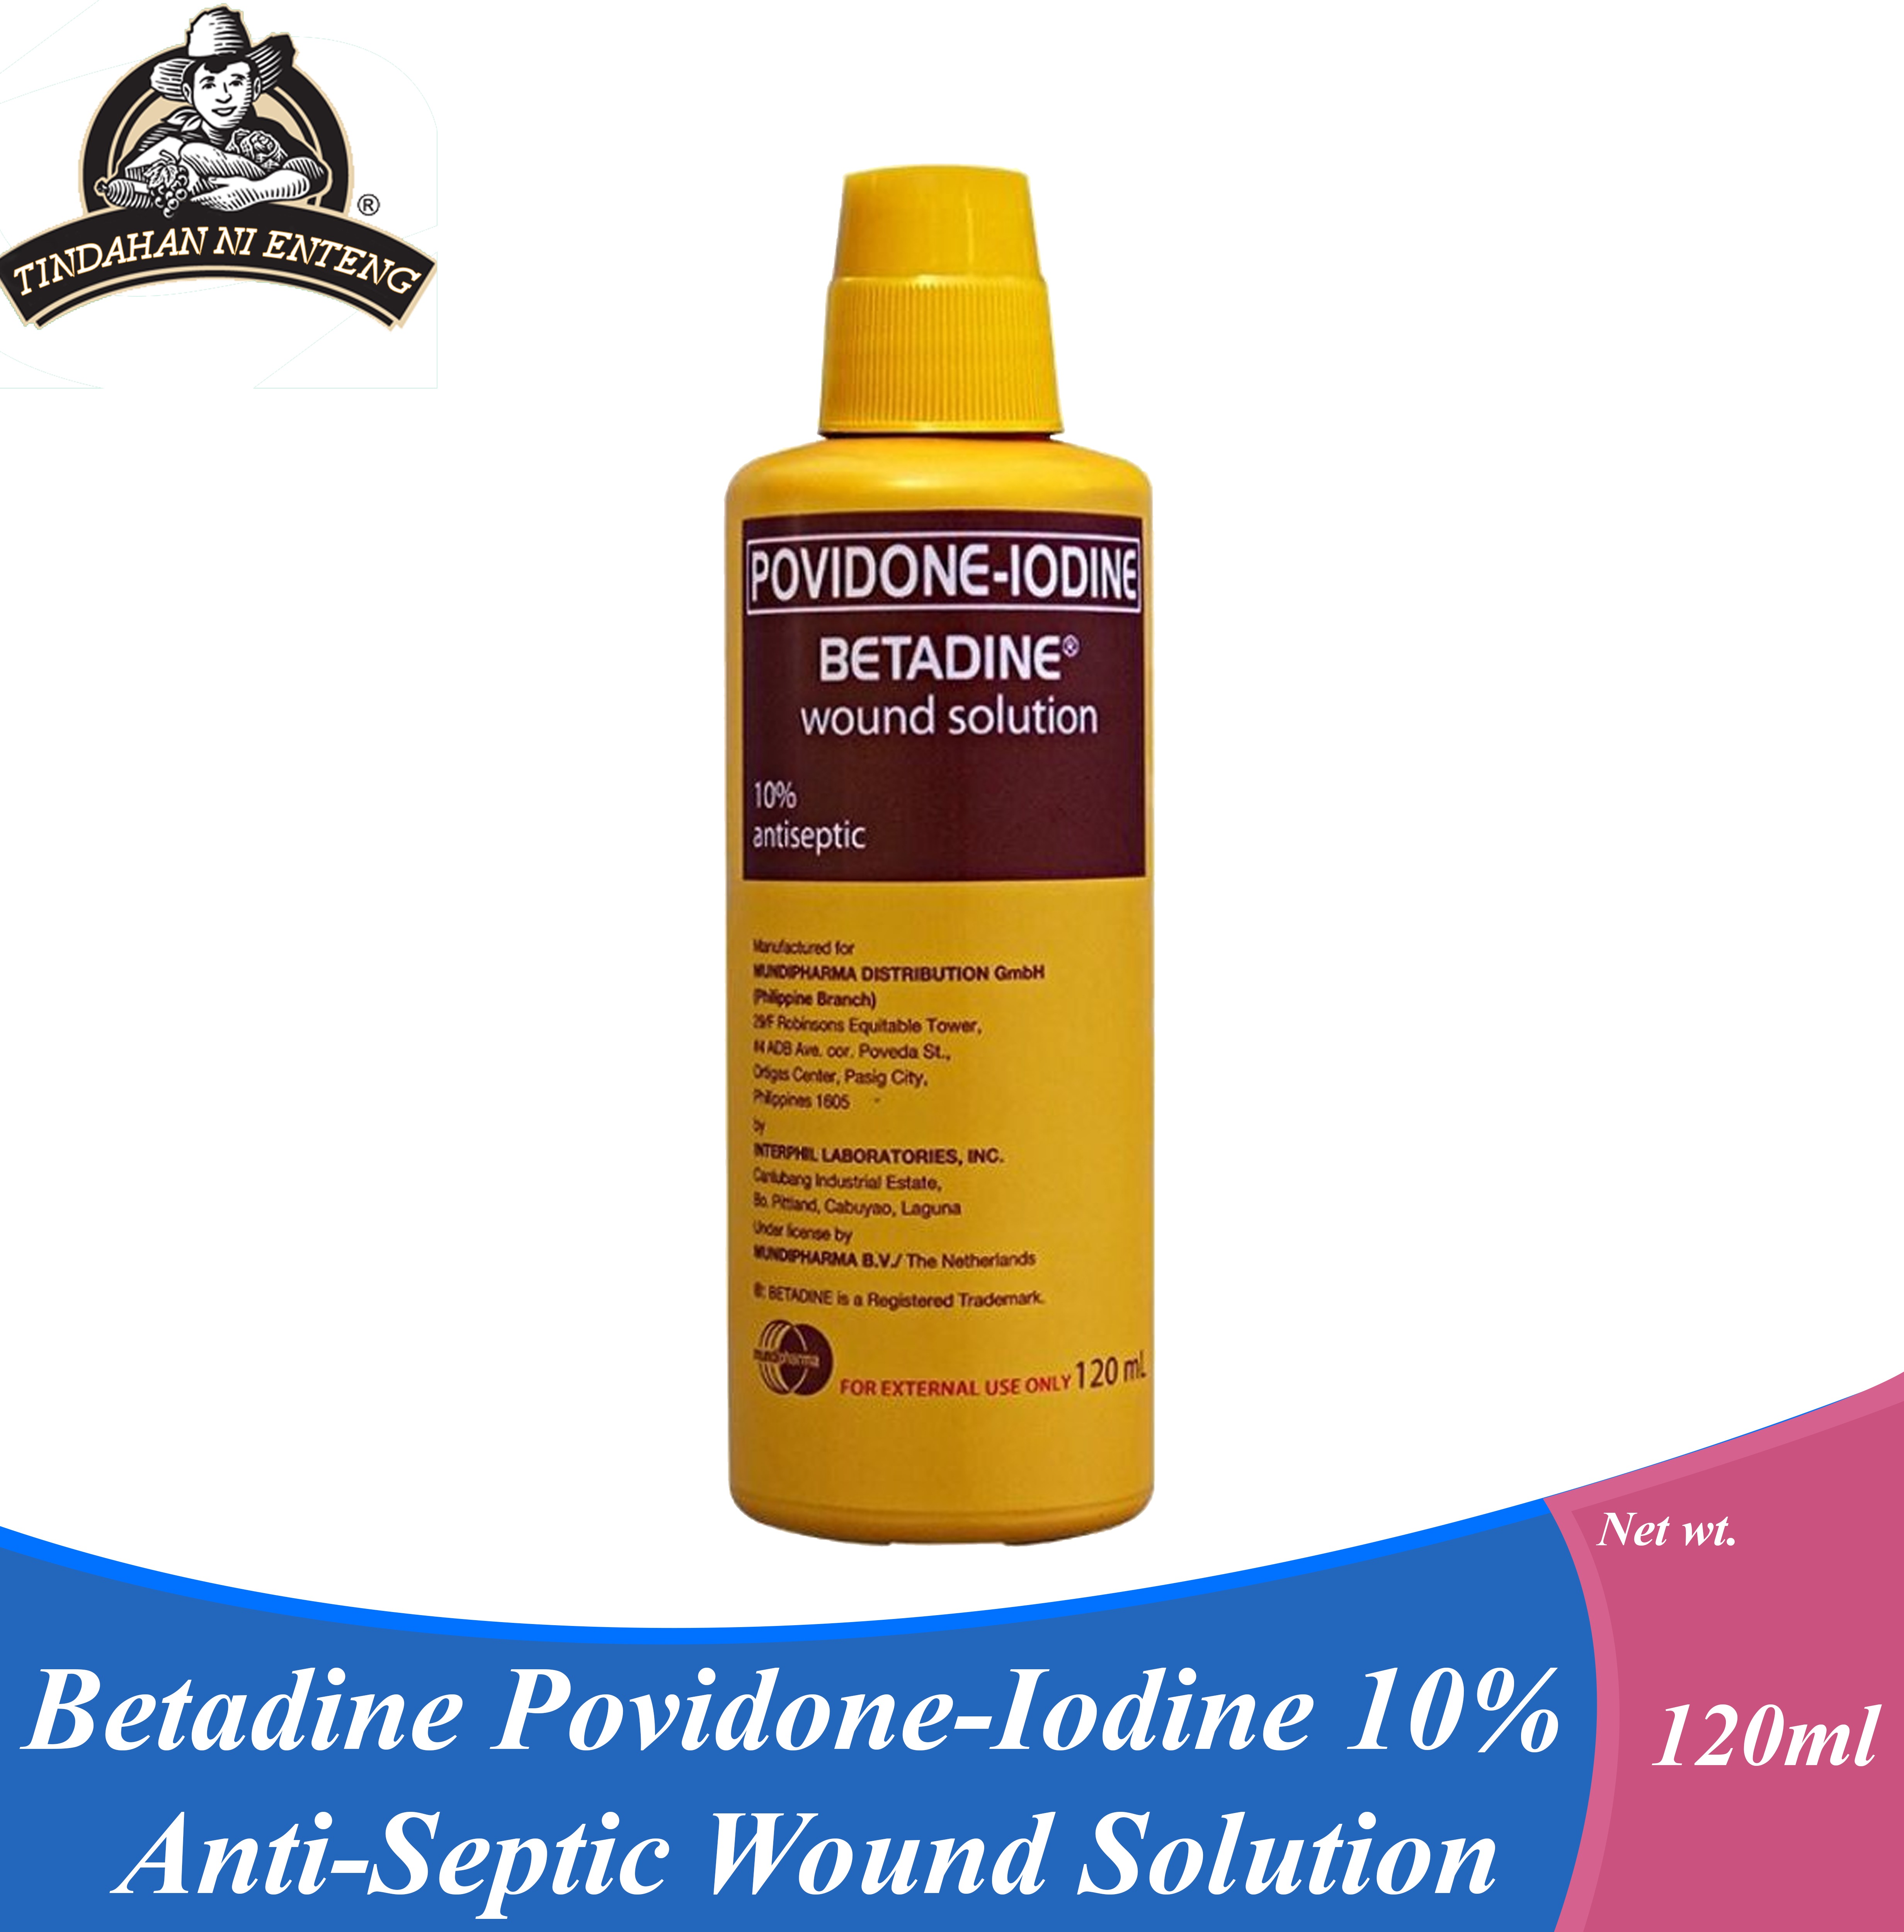 Betadine Povidone-Iodine 10% Anti-Septic Wound Solution 120ML